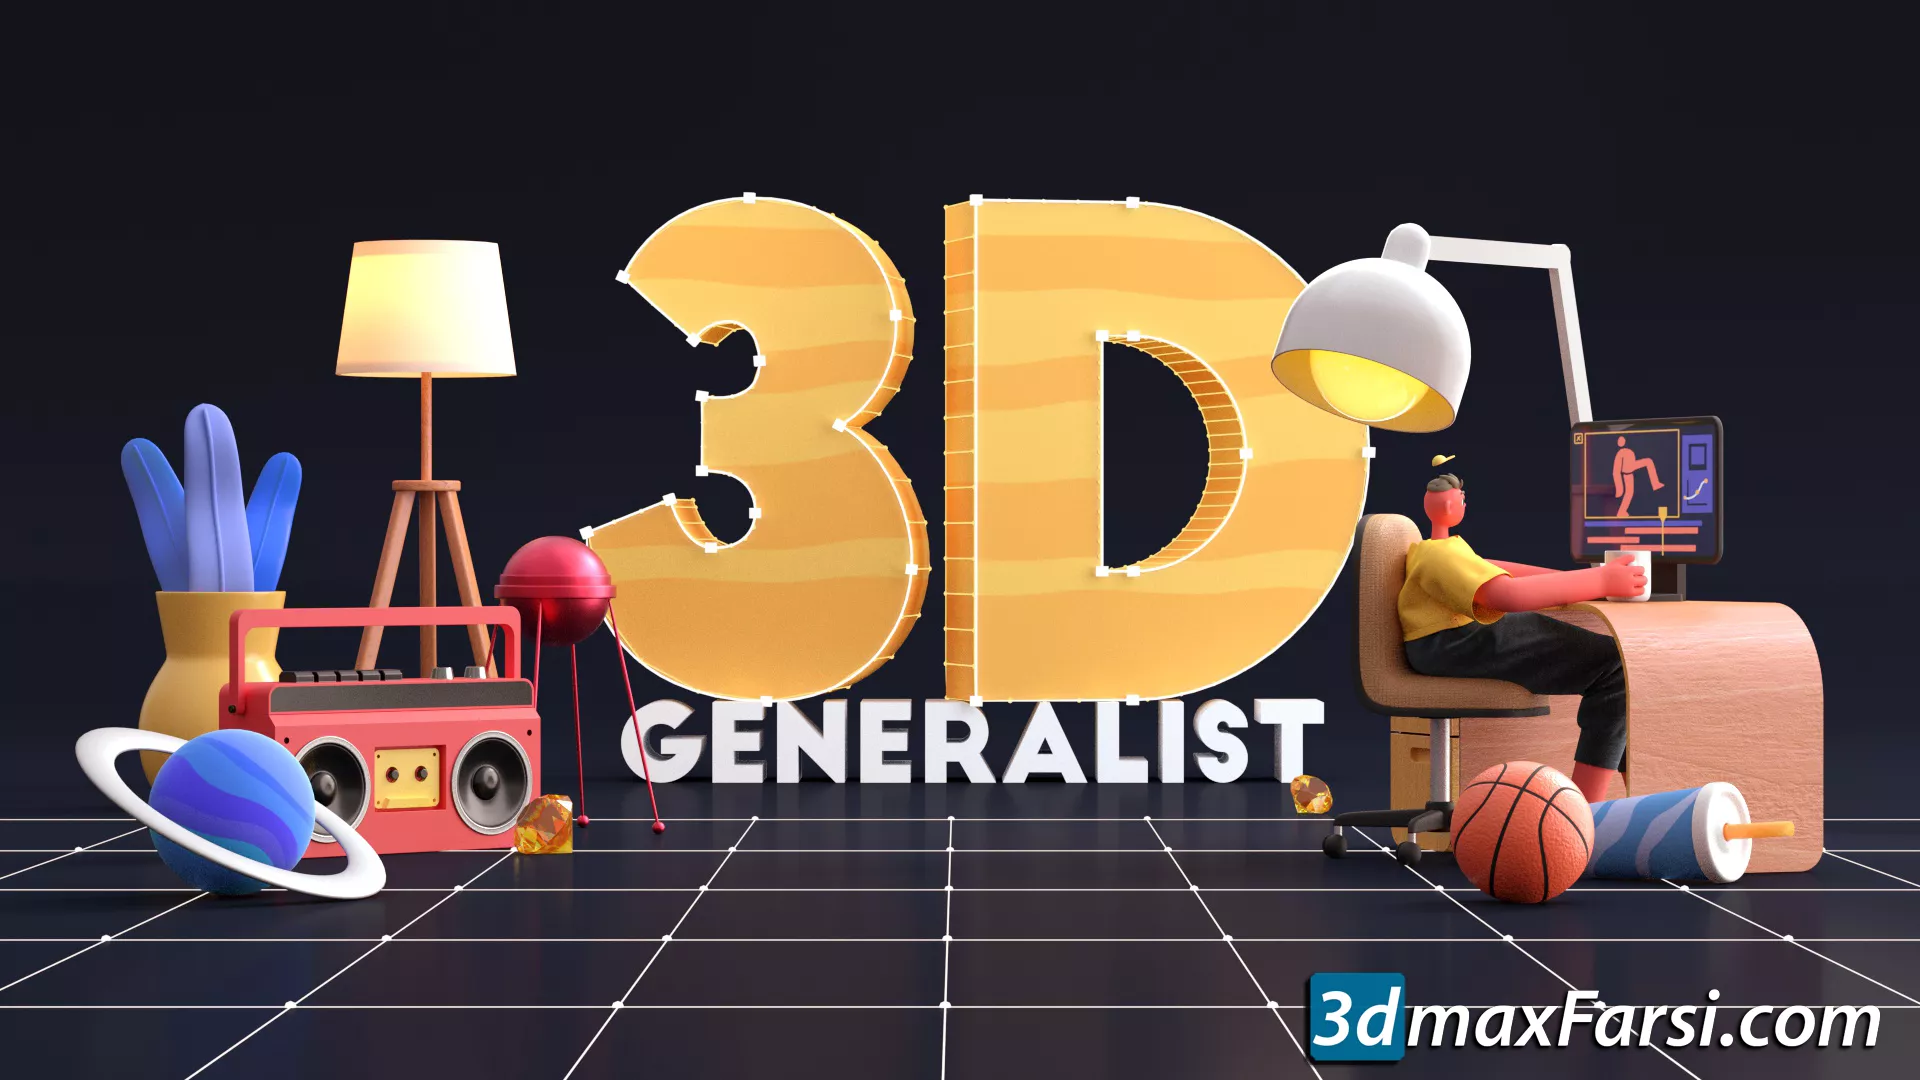 Motion Design School – 3D Generalist free download